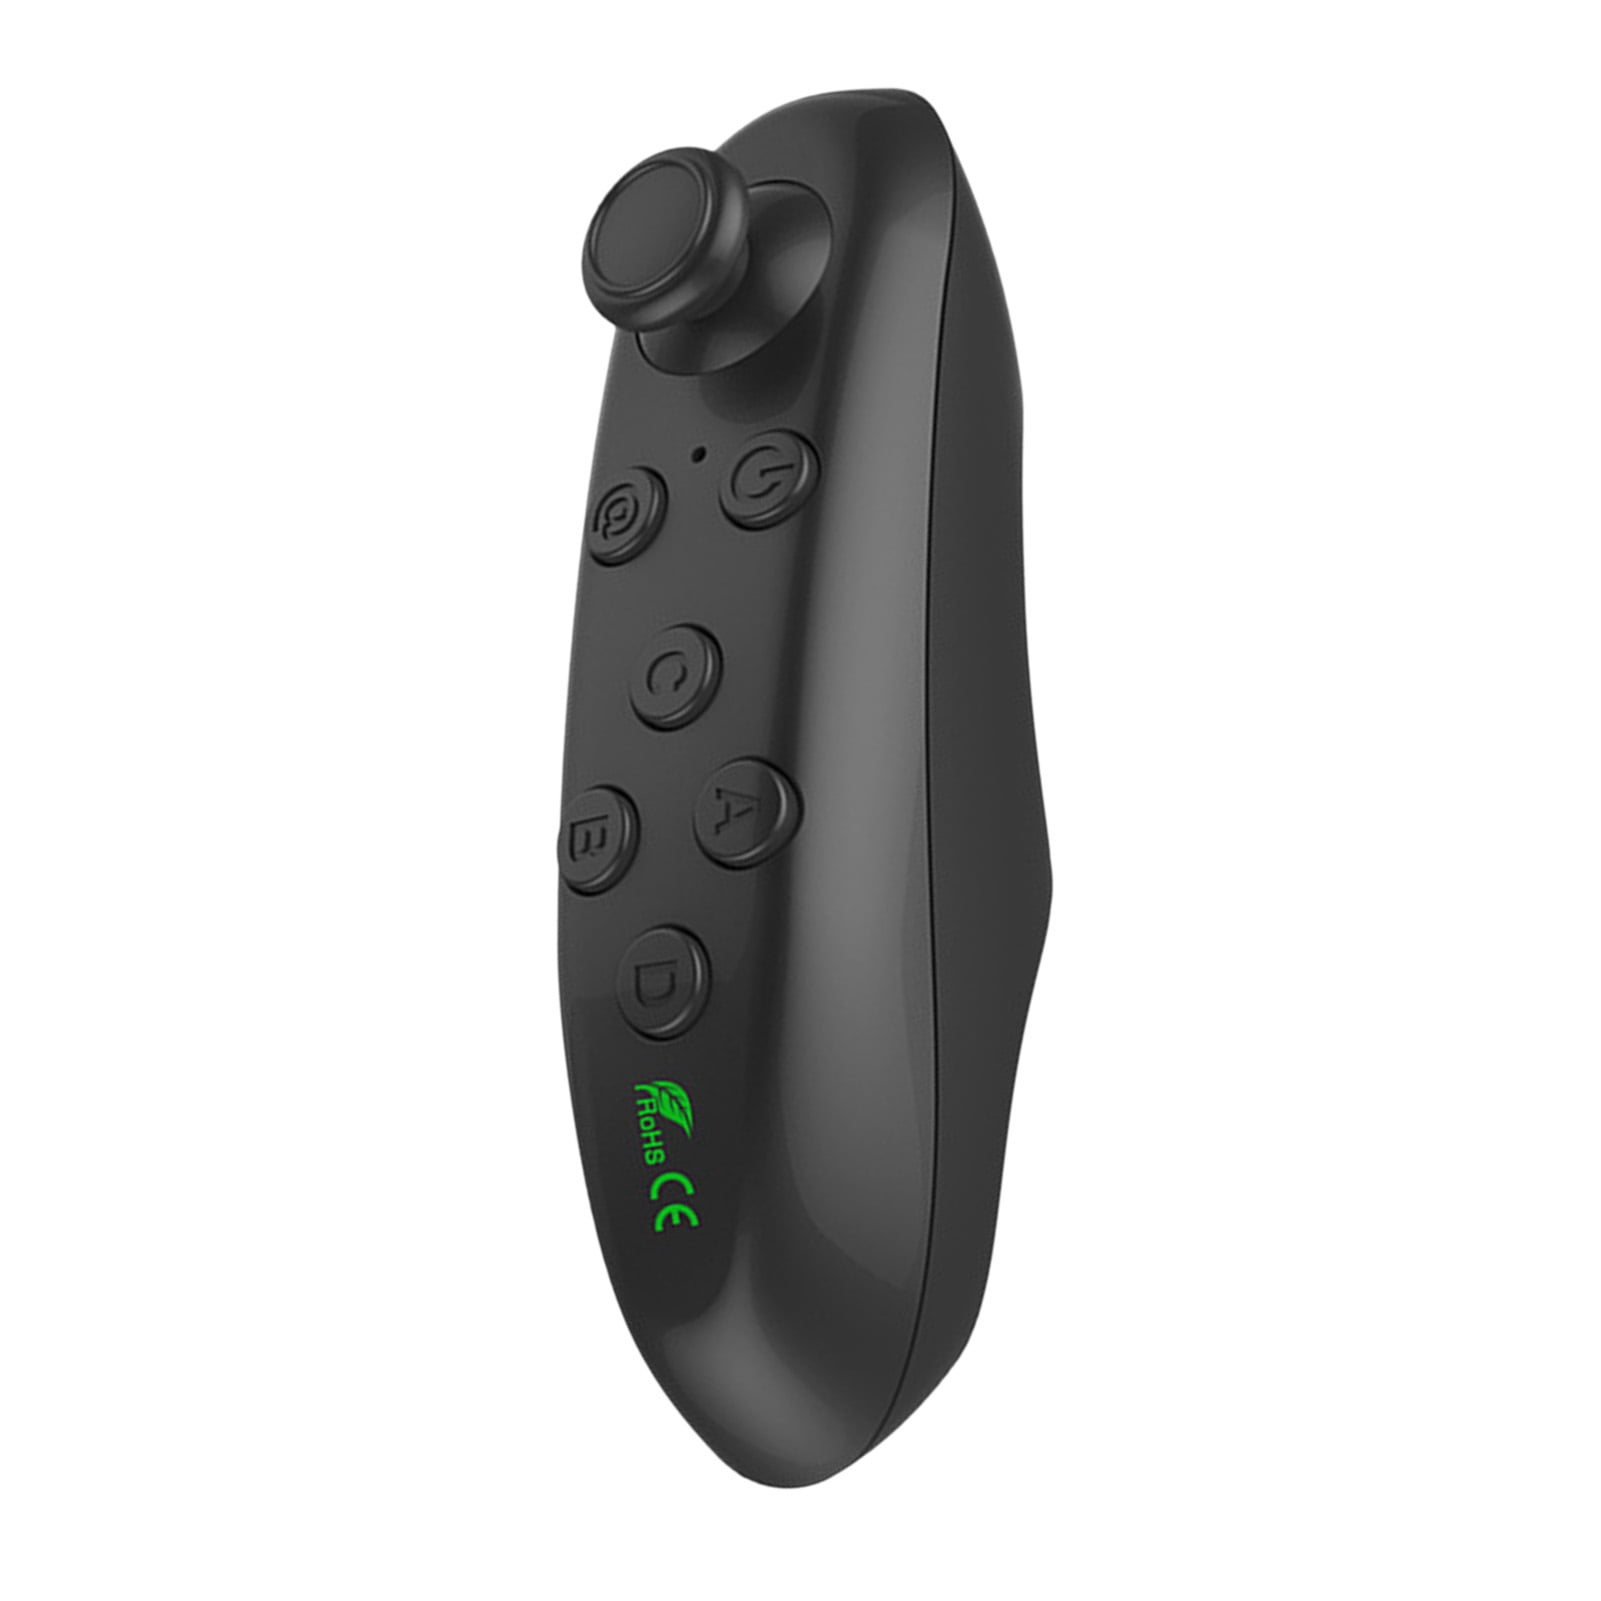 Doe mee Faculteit Erfgenaam Viugreum VR Remote Controller Gamepad Bluetooth Control for iPhone Android  - Walmart.com